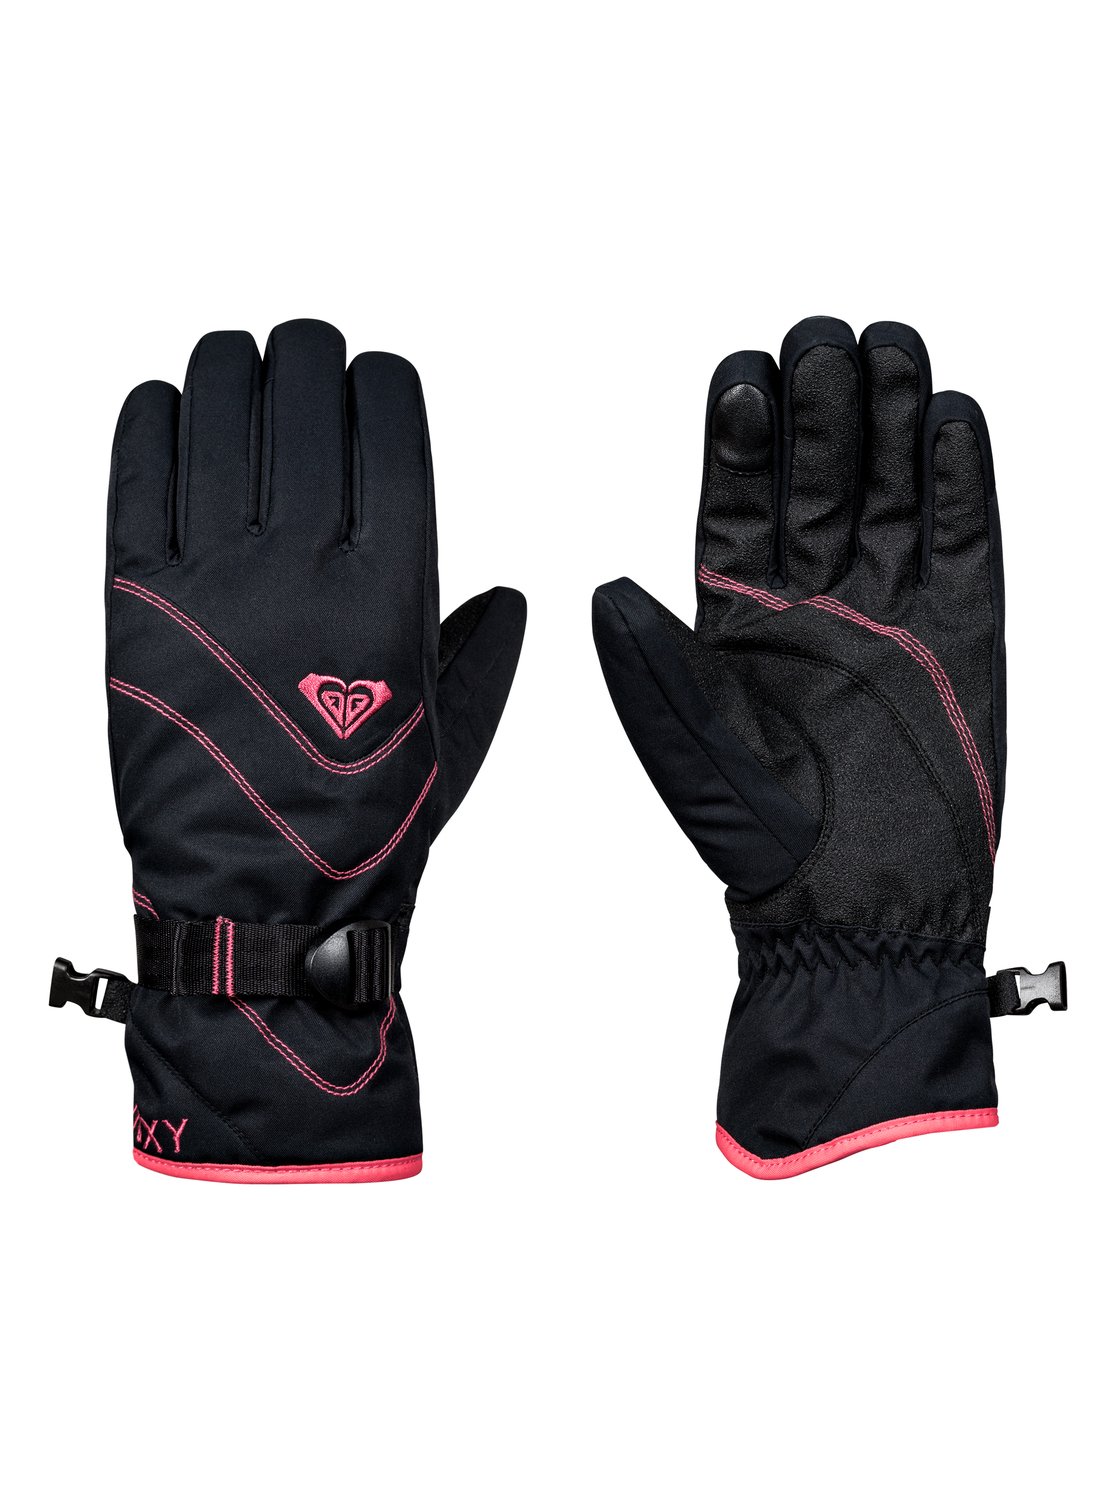 ROXY Jetty Ski/Snowboard Gloves